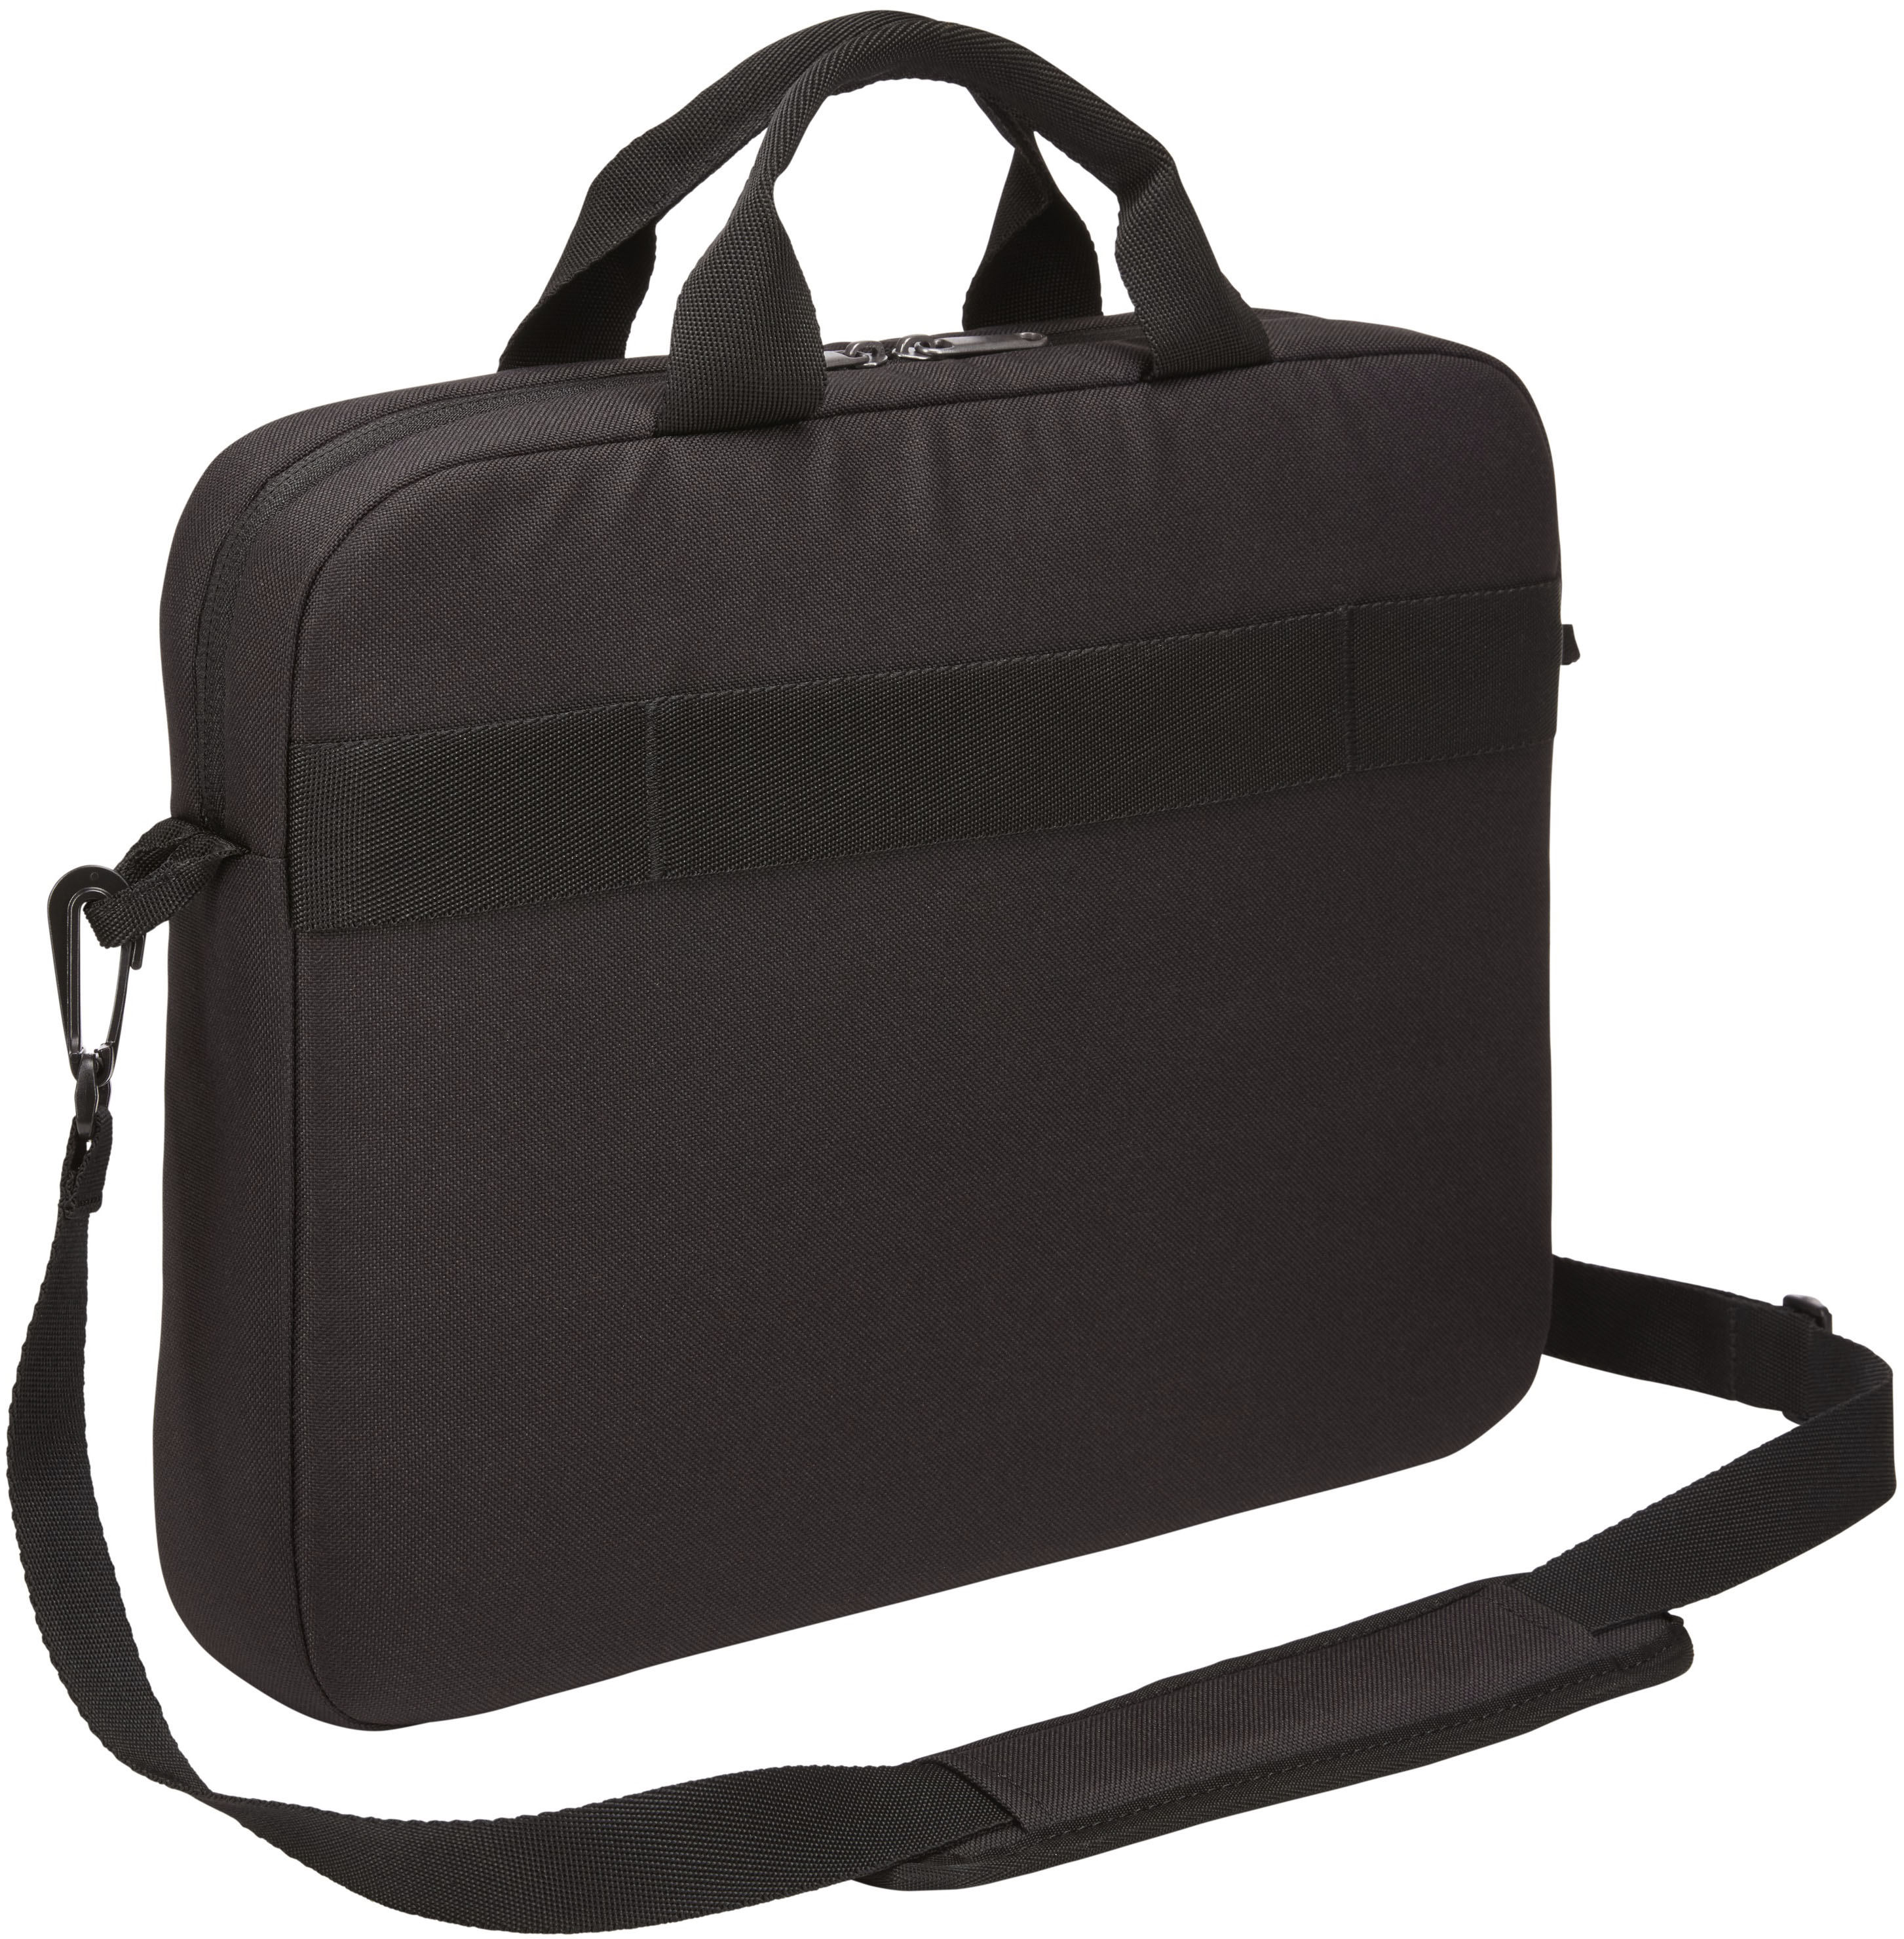 Back View: Solo - Classic Triple-Compartment Laptop Briefcase for 15.6" Laptop - Black